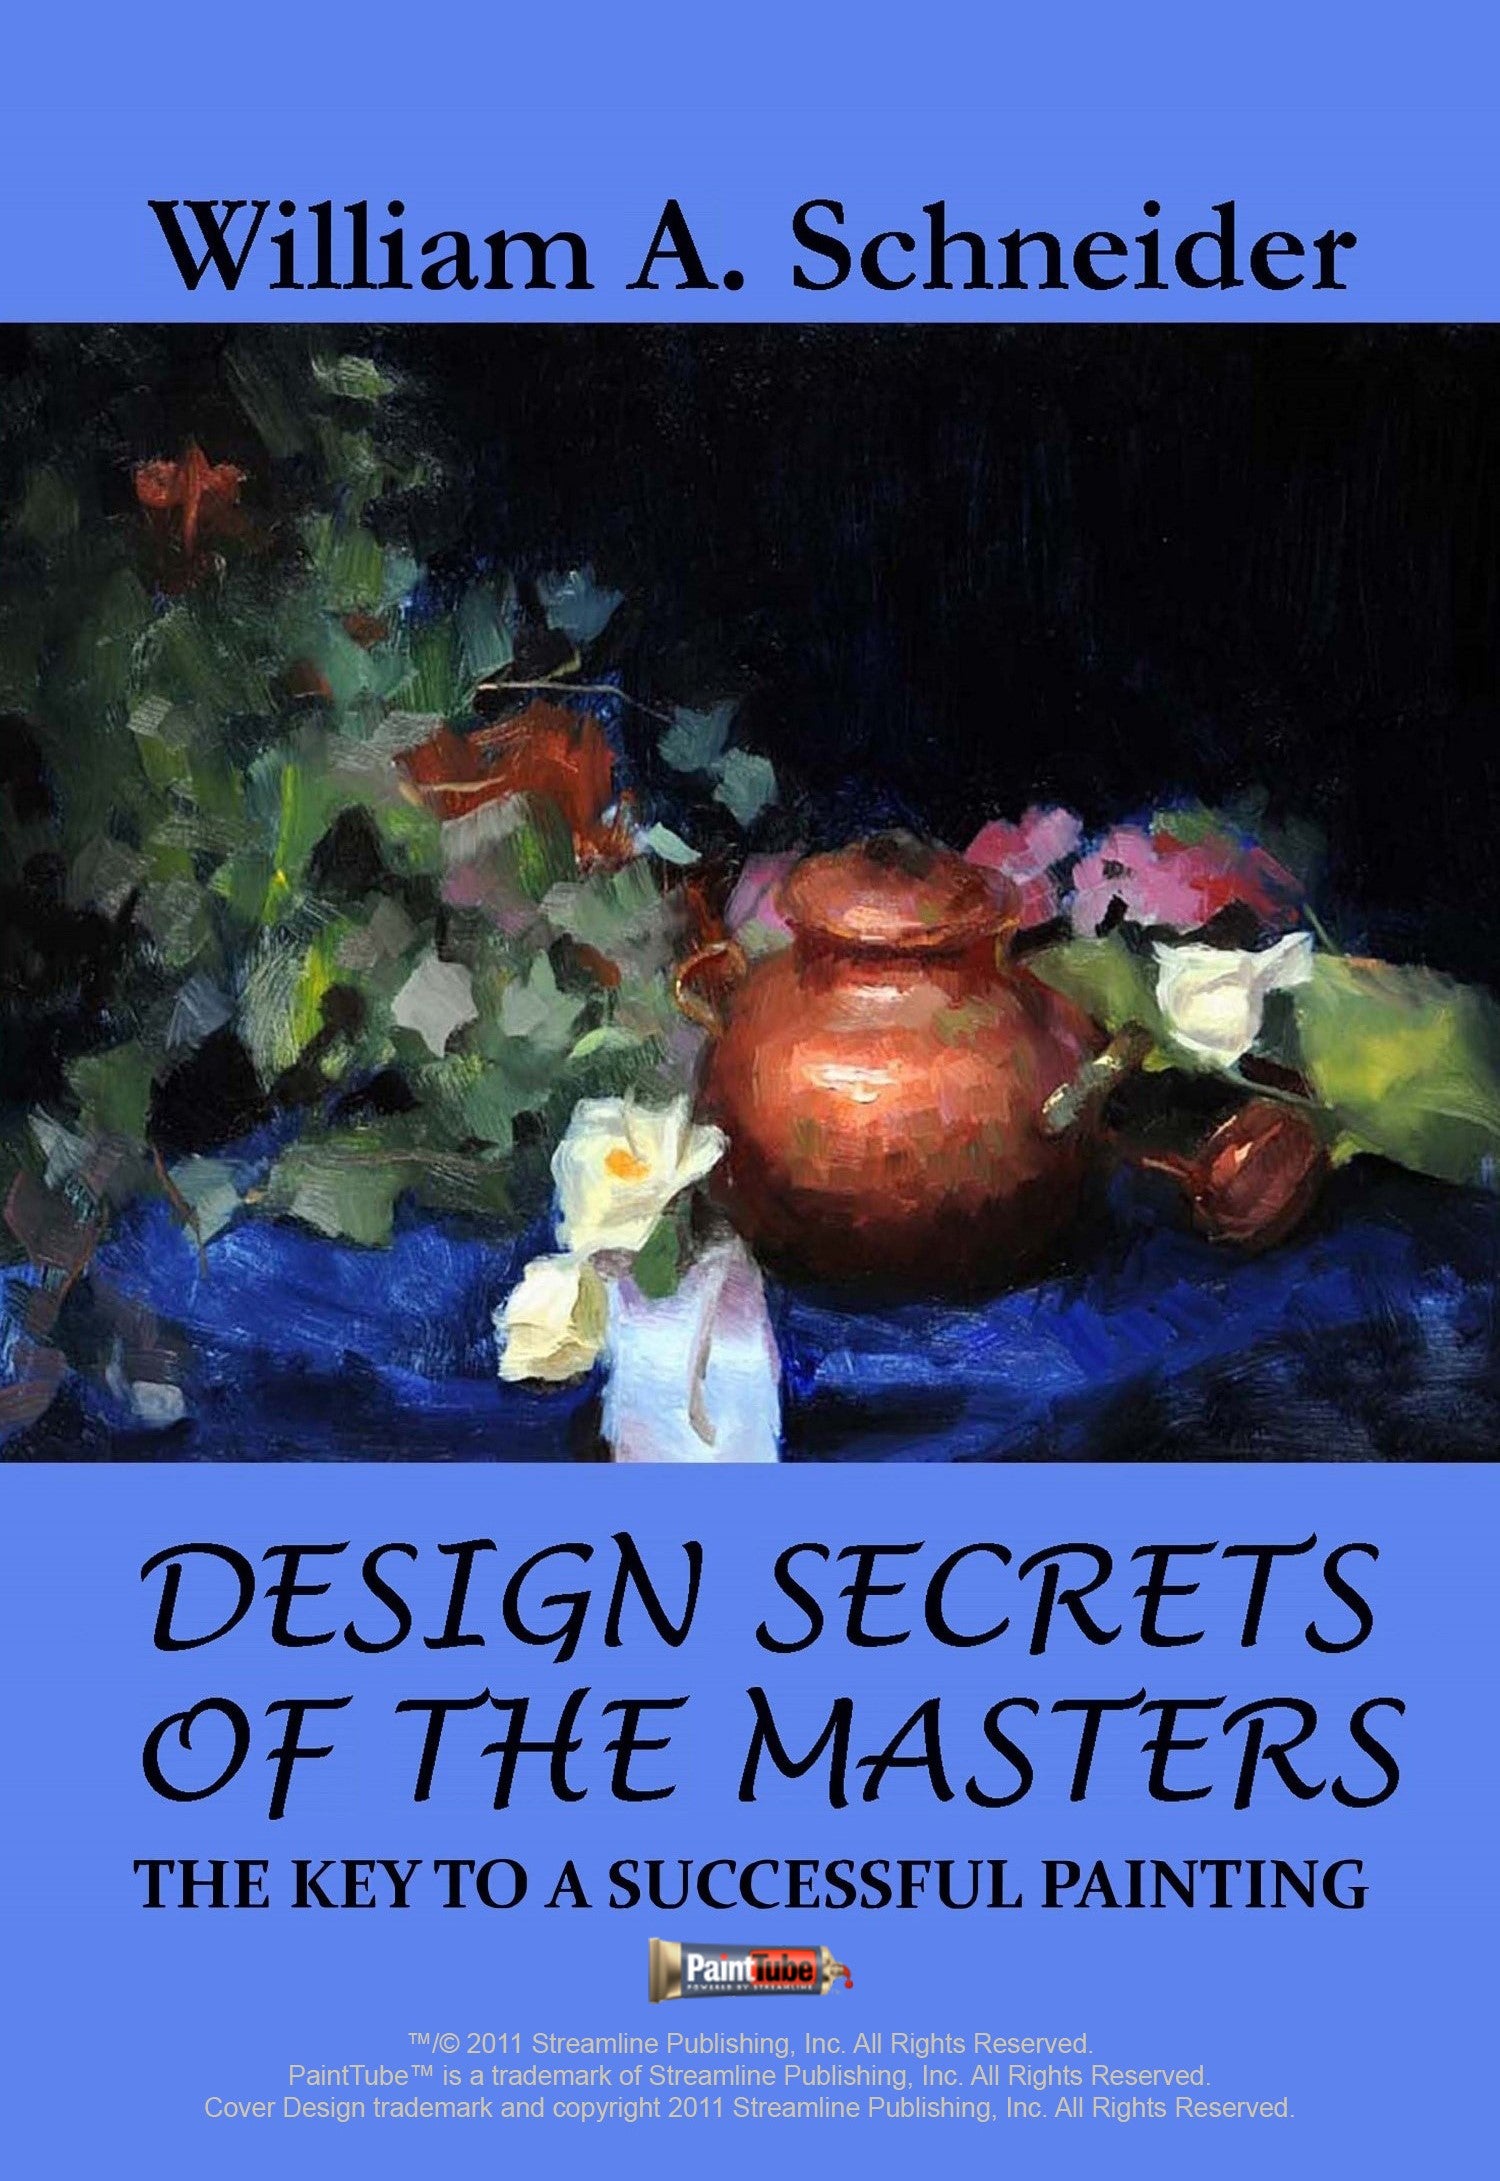 William A. Schneider: Design Secrets of the Masters